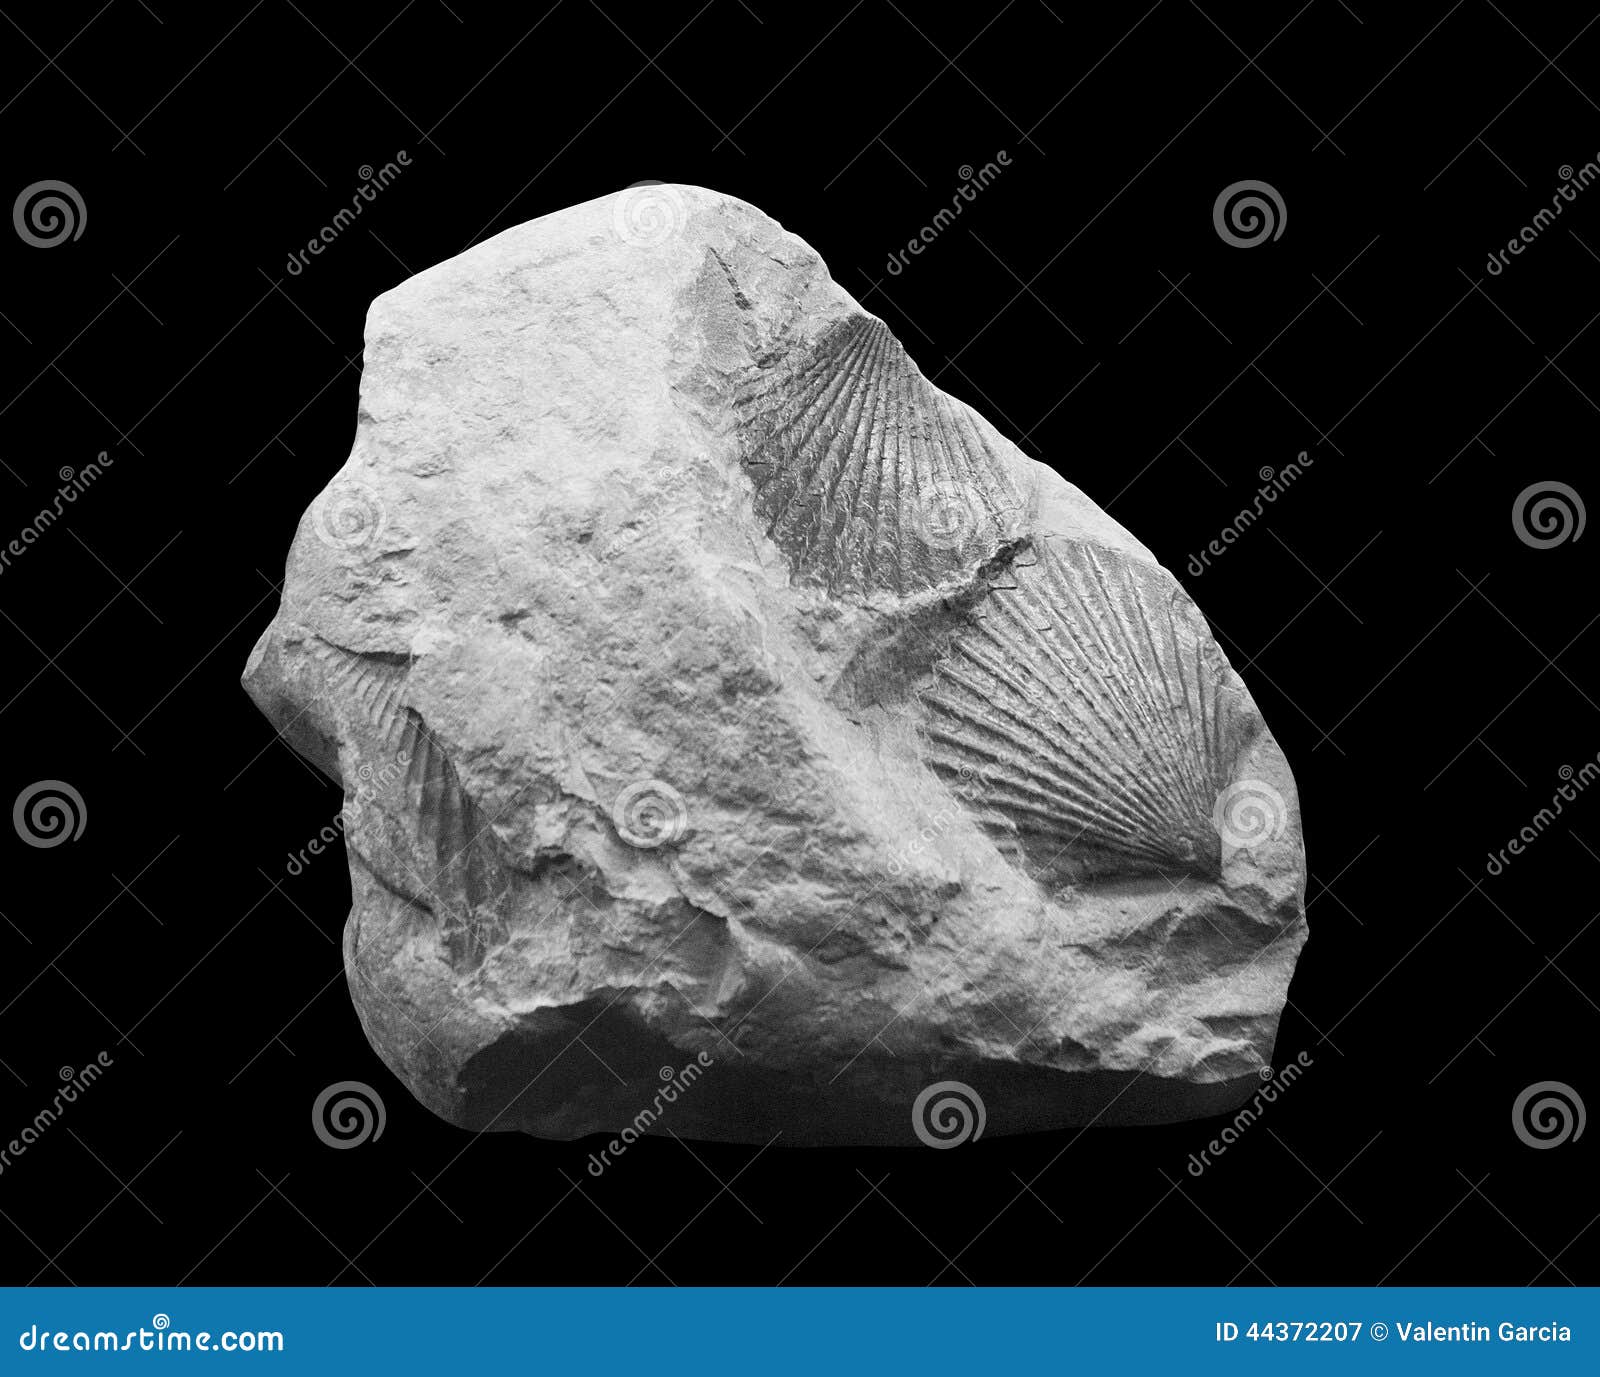 bivalves fossils